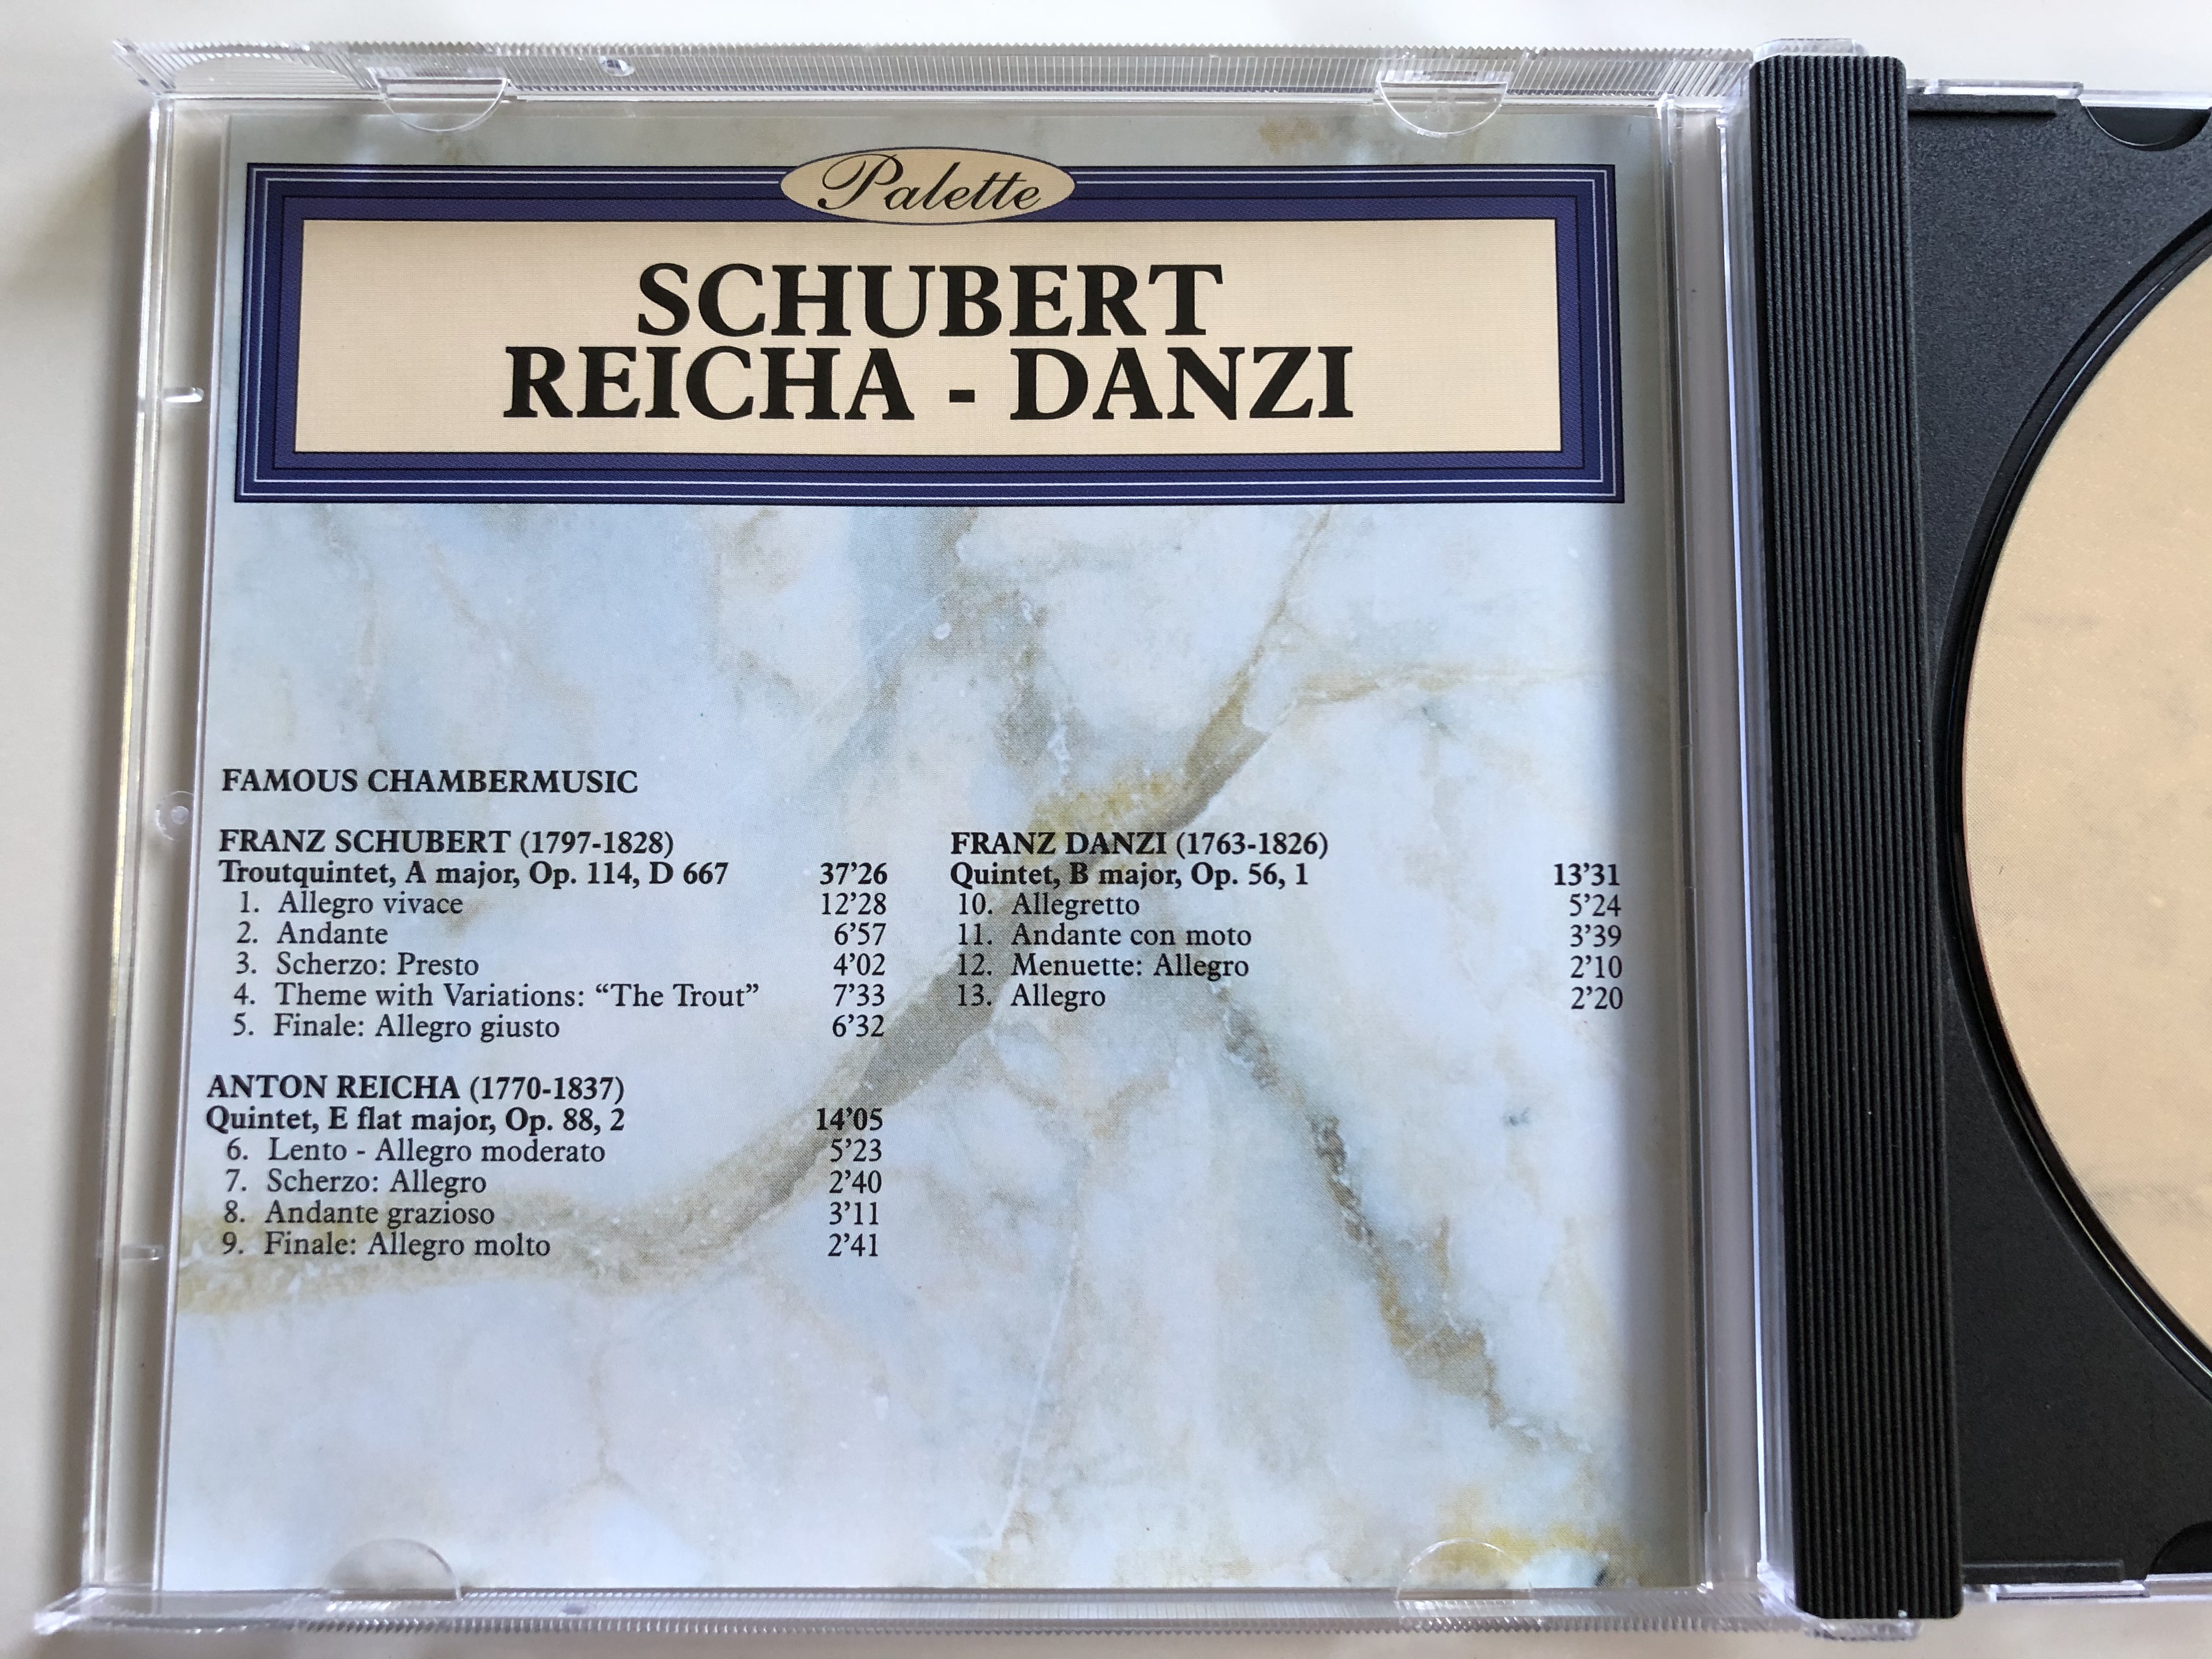 schubert-reicha-danzi-famous-chamber-music-palette-audio-cd-1996-pal085-2-.jpg